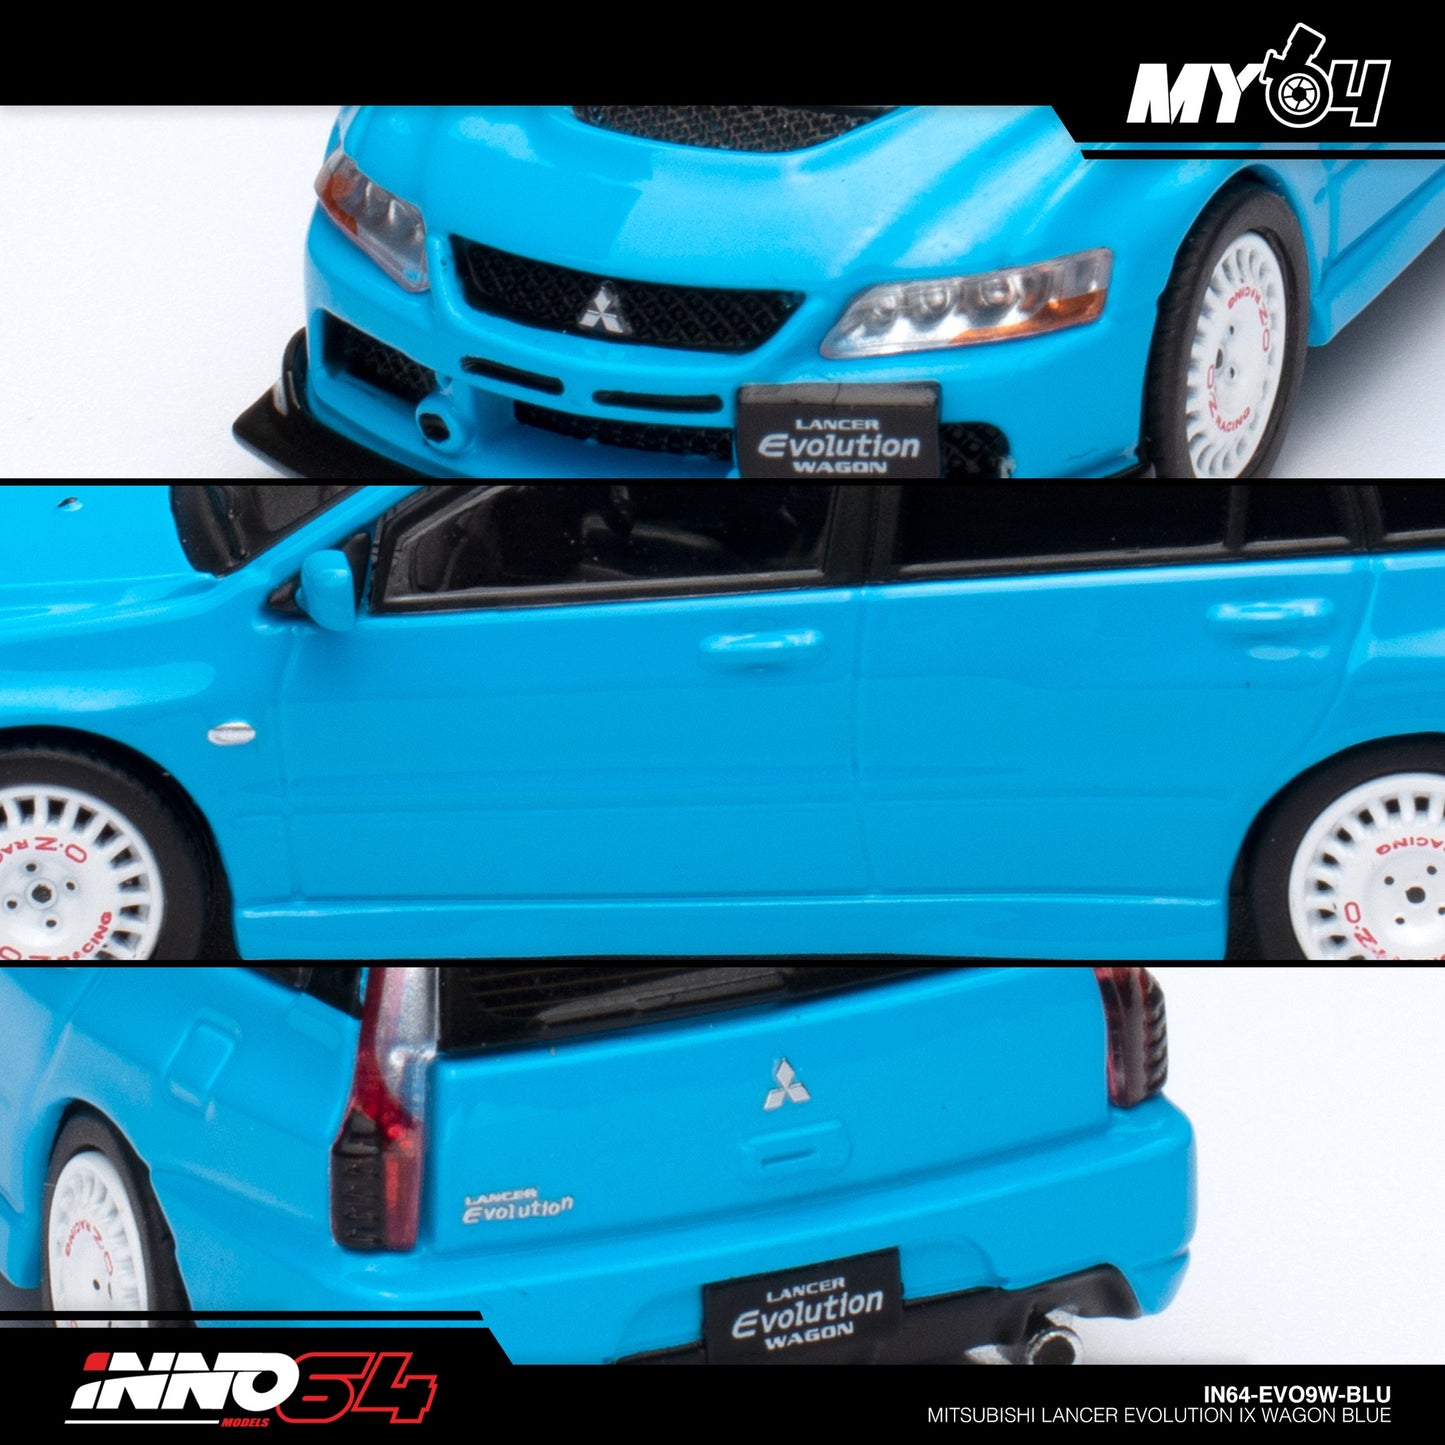 [INNO64] Mitsubishi Lancer Evolution IX - Wagon Blue